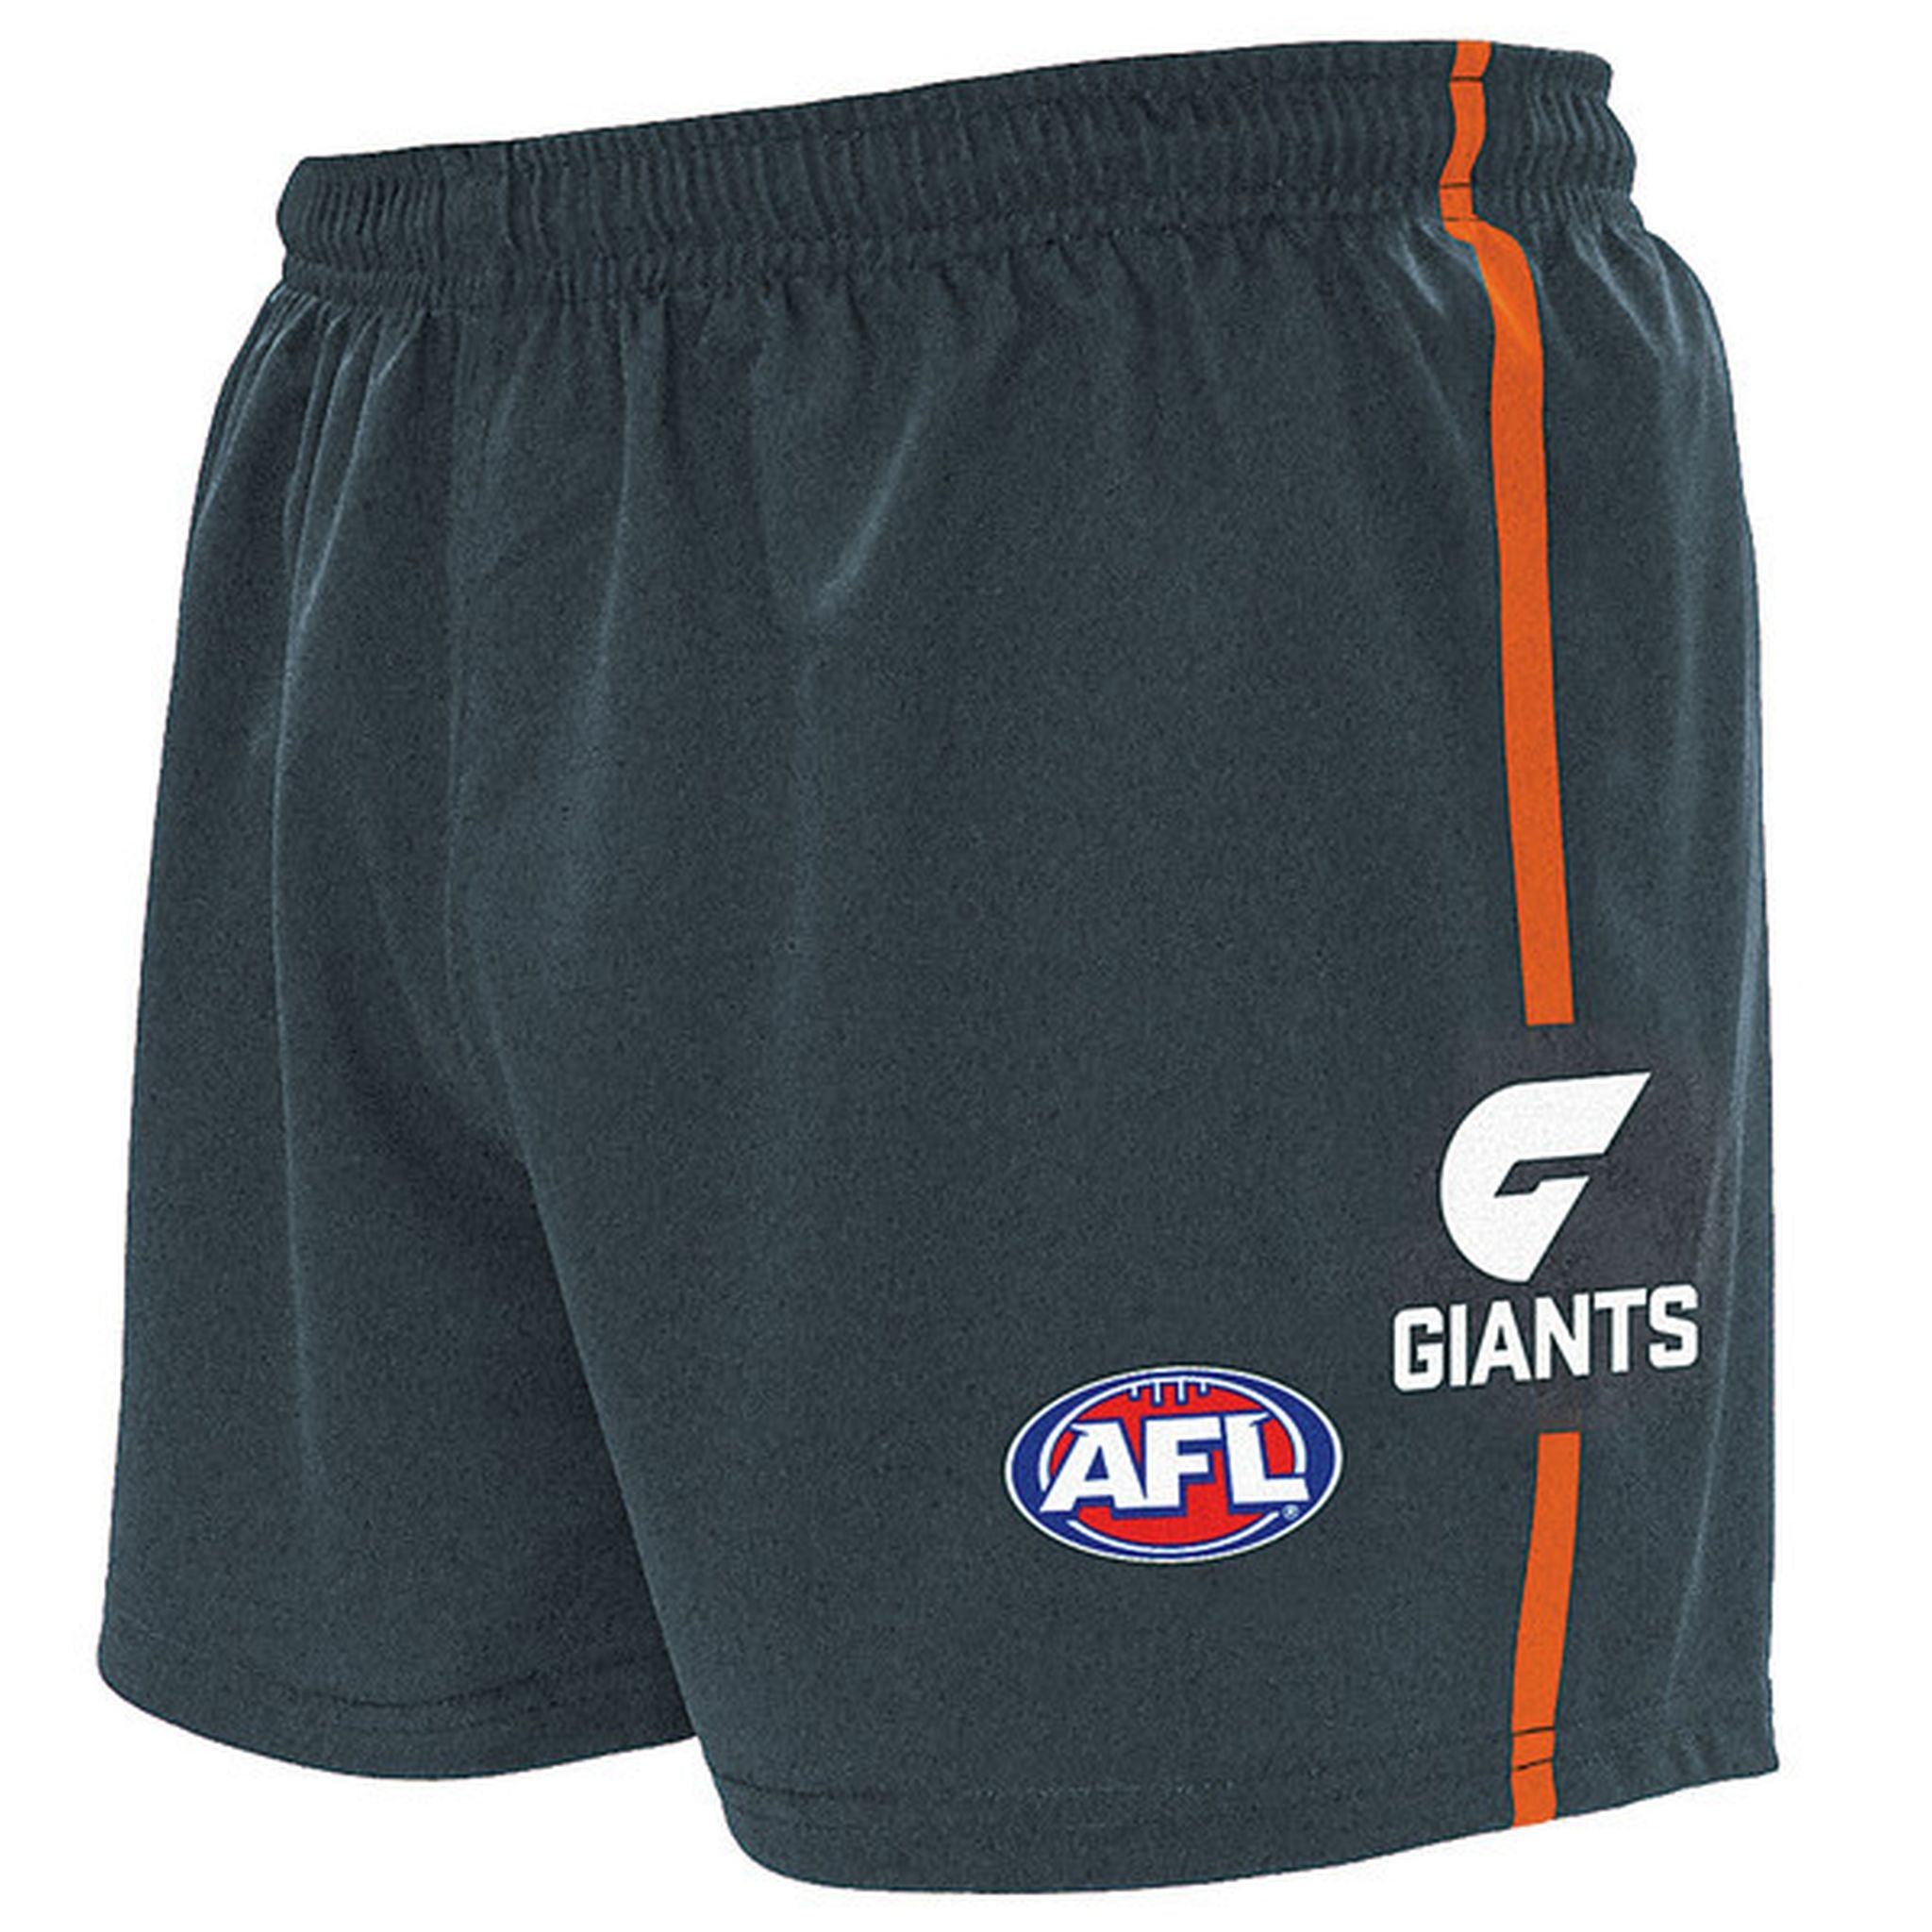 Burley GWS Giants AFL Replica Adults Shorts